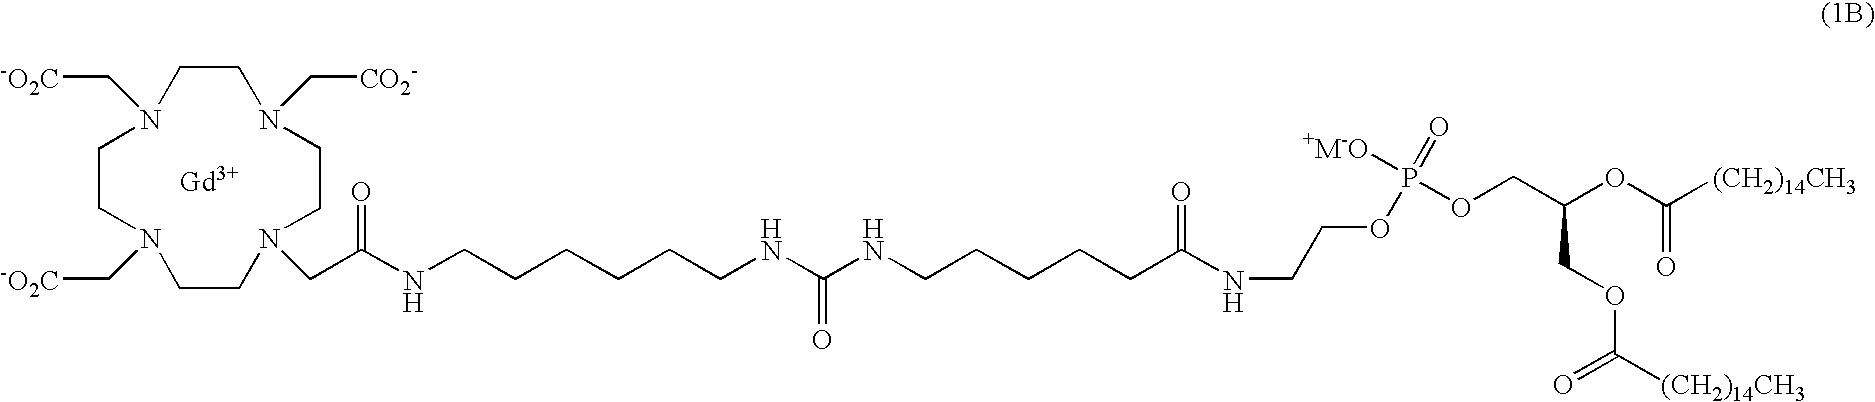 Lipophilic derivatives of chelate monoamides